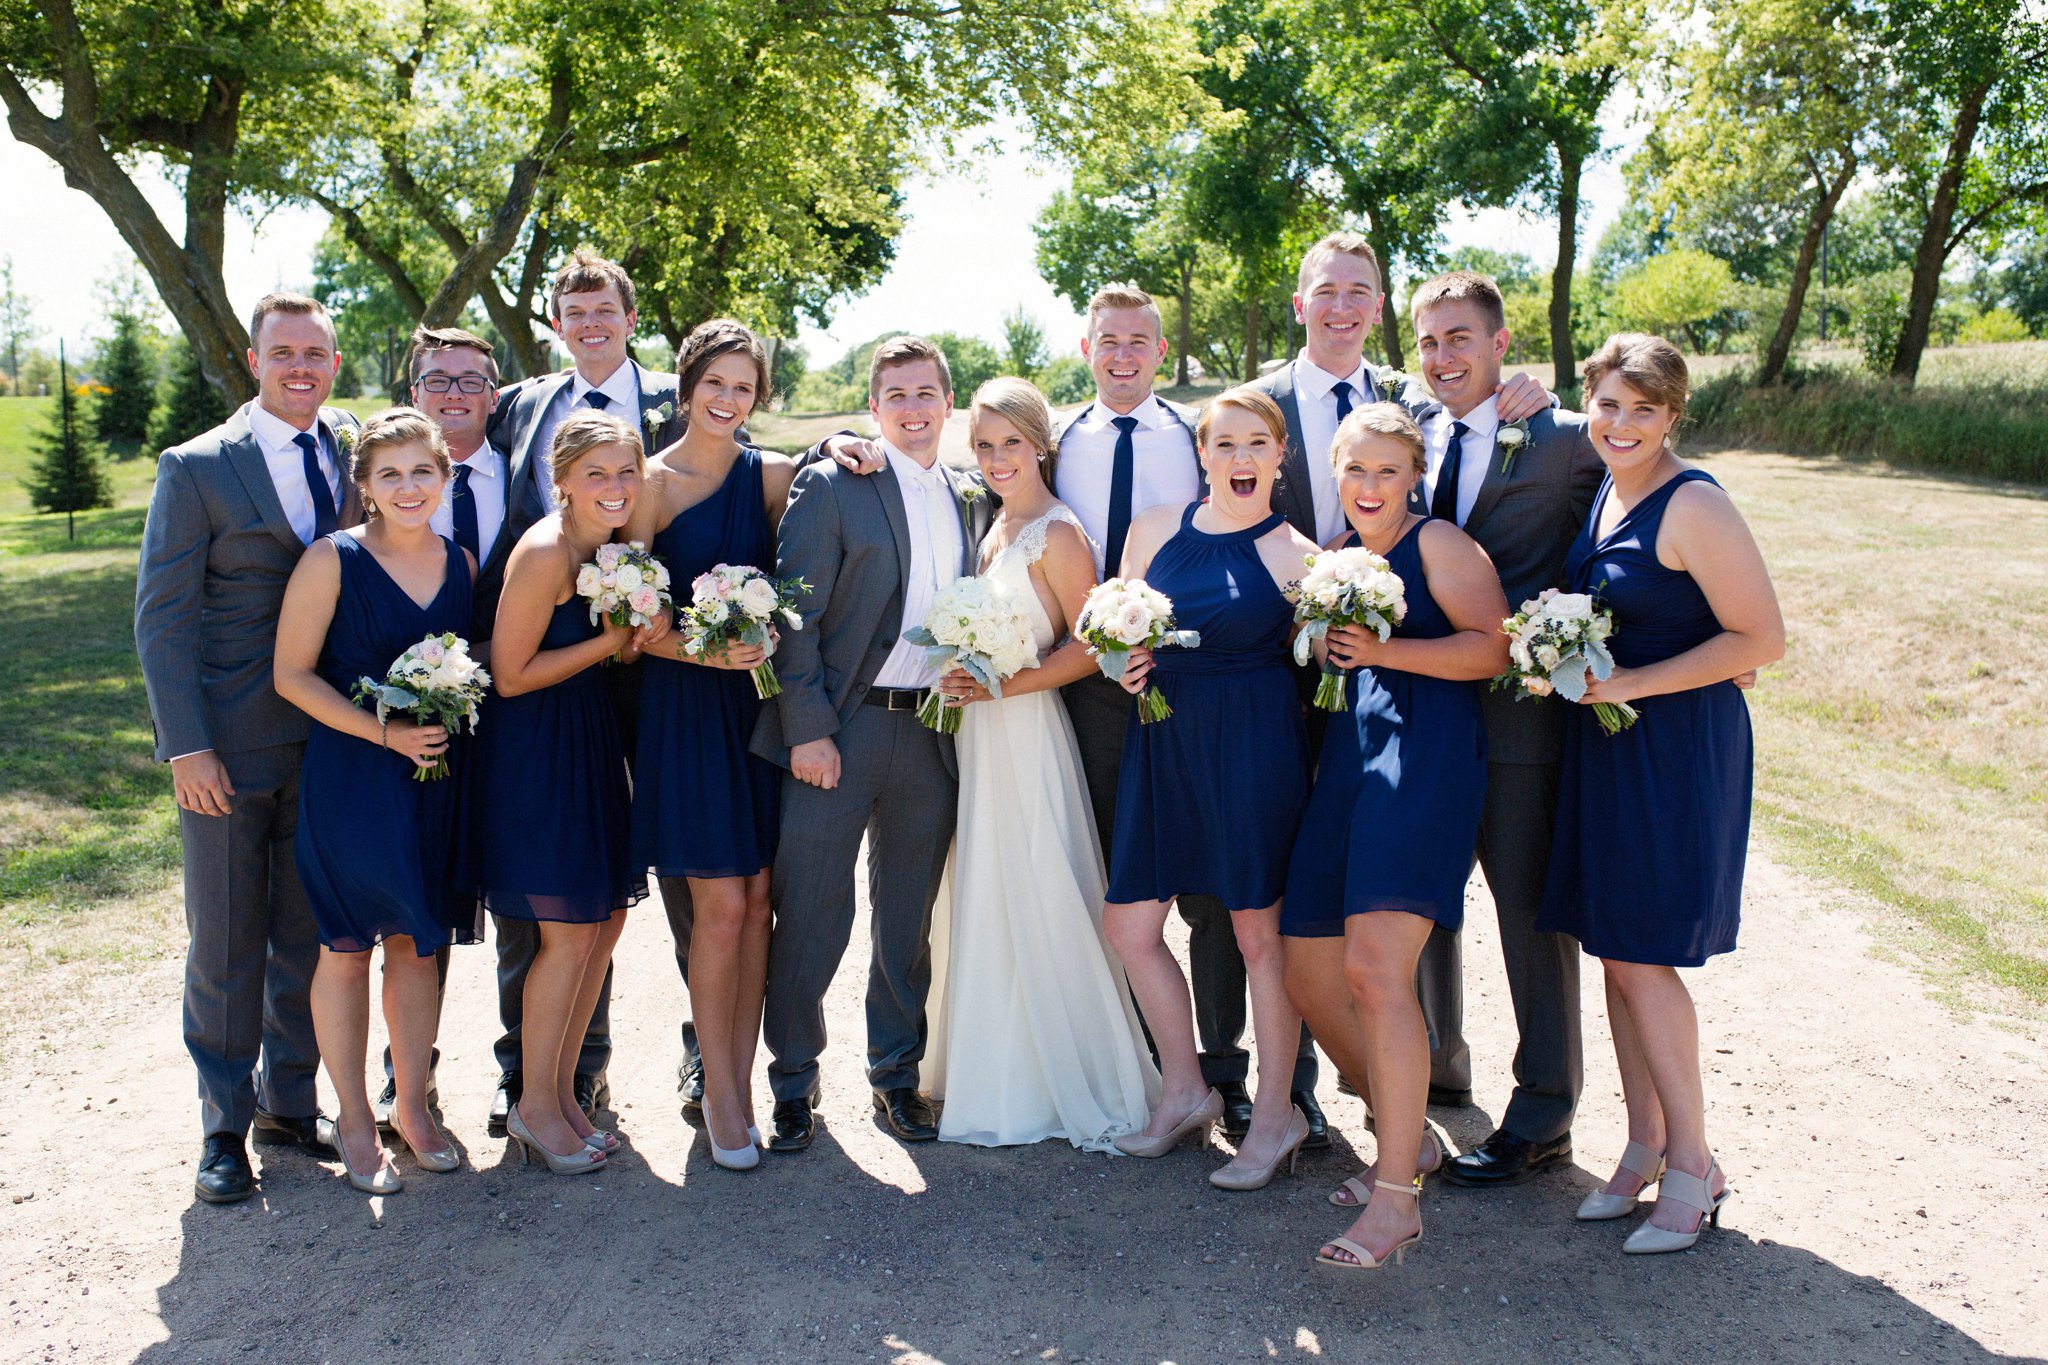 Sioux Falls Wedding Photos | Destination Photographer | Felicia The Photographer | Mary Jo Wegner Arboretum | Bridal Party | Navy one shoulder dresses | Fun | Casual